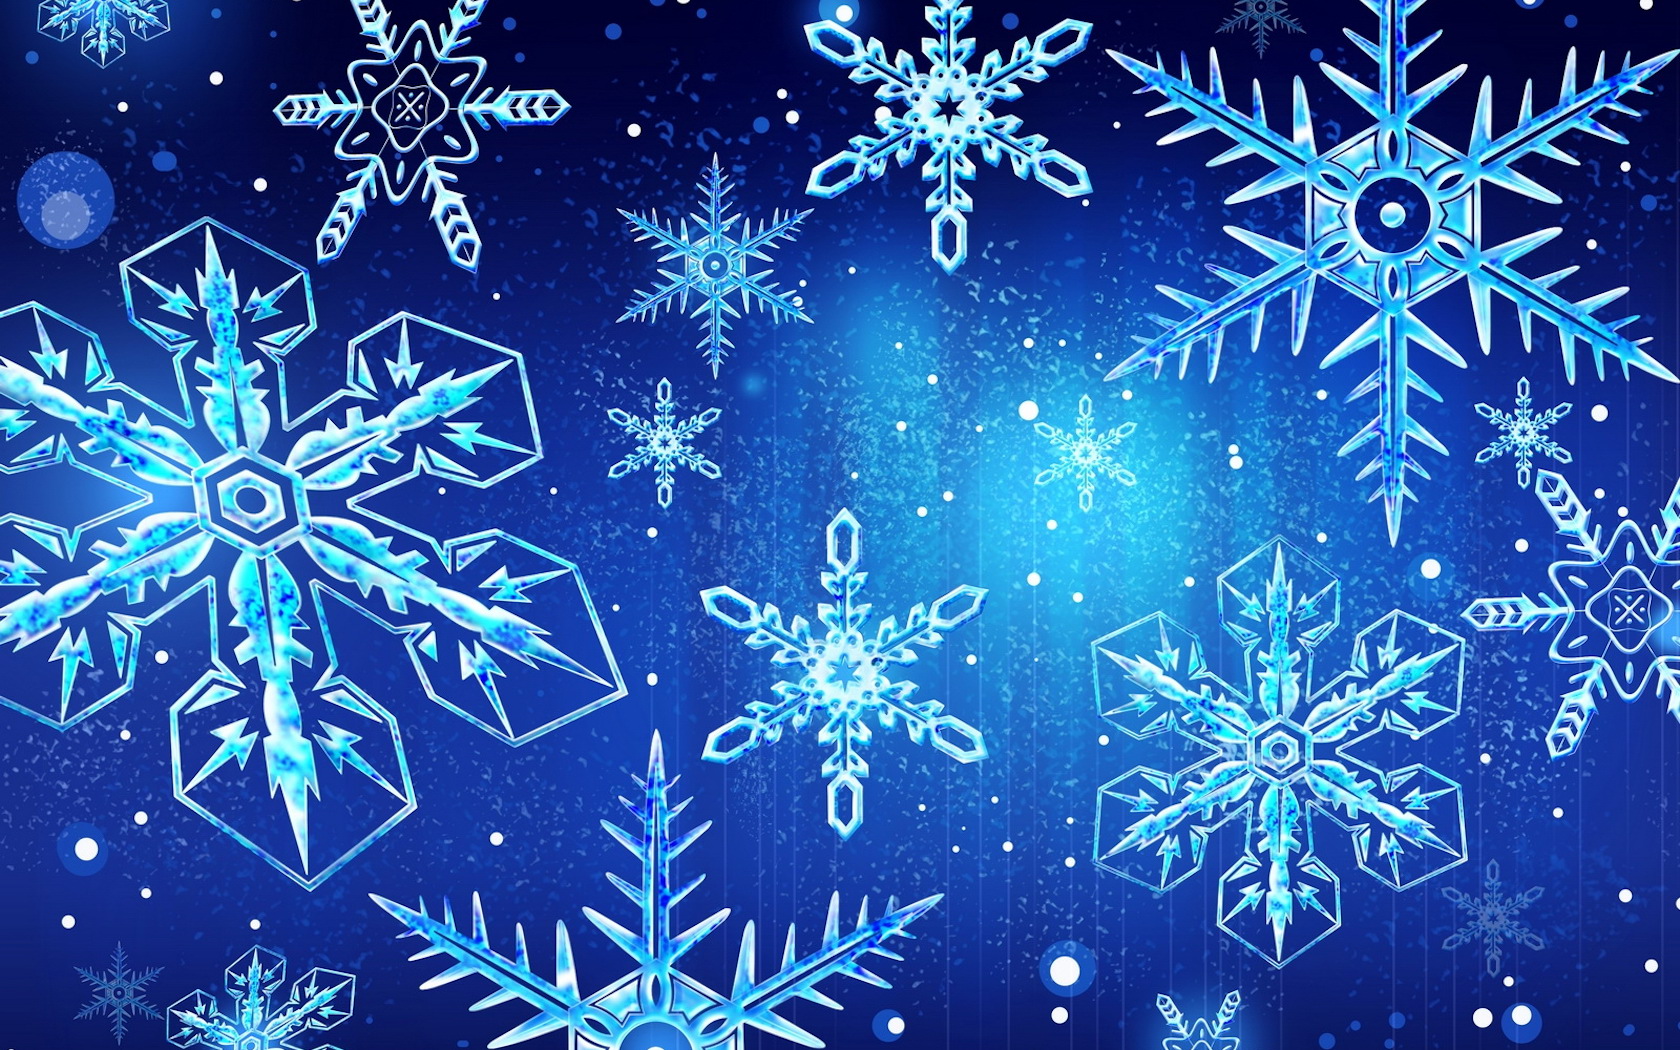 snowflakes-falling-background-wallpaper-4.jpg